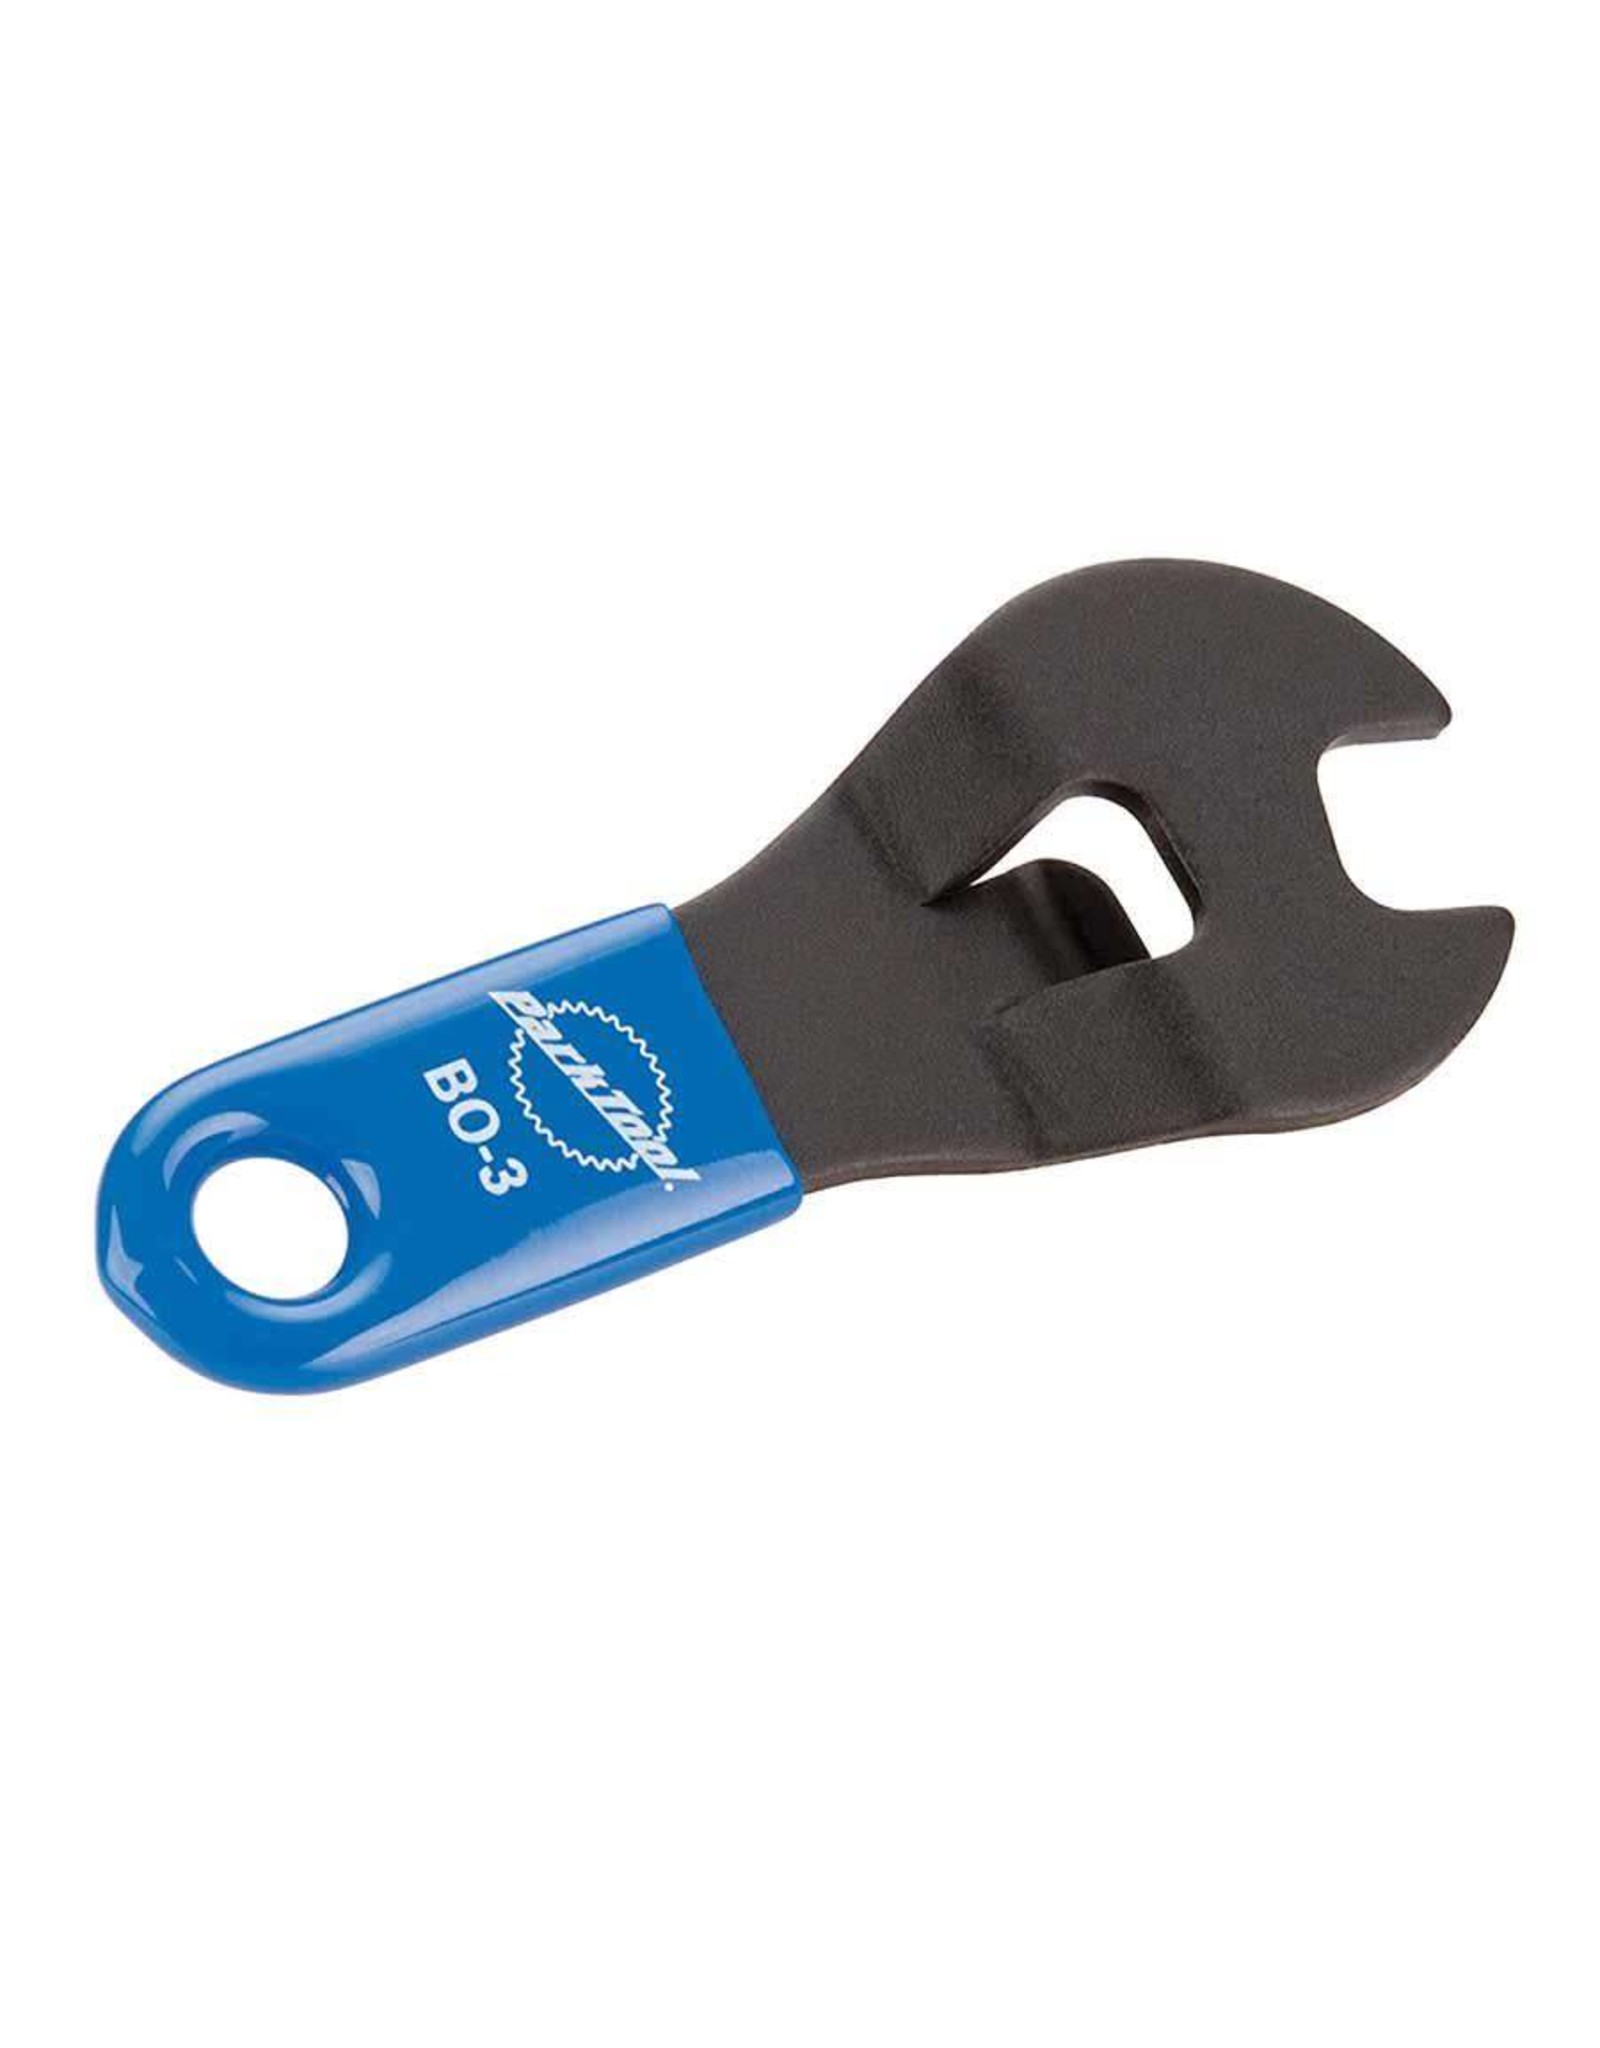 Park tool Keychain bottle opener with 10mm key, BO-3